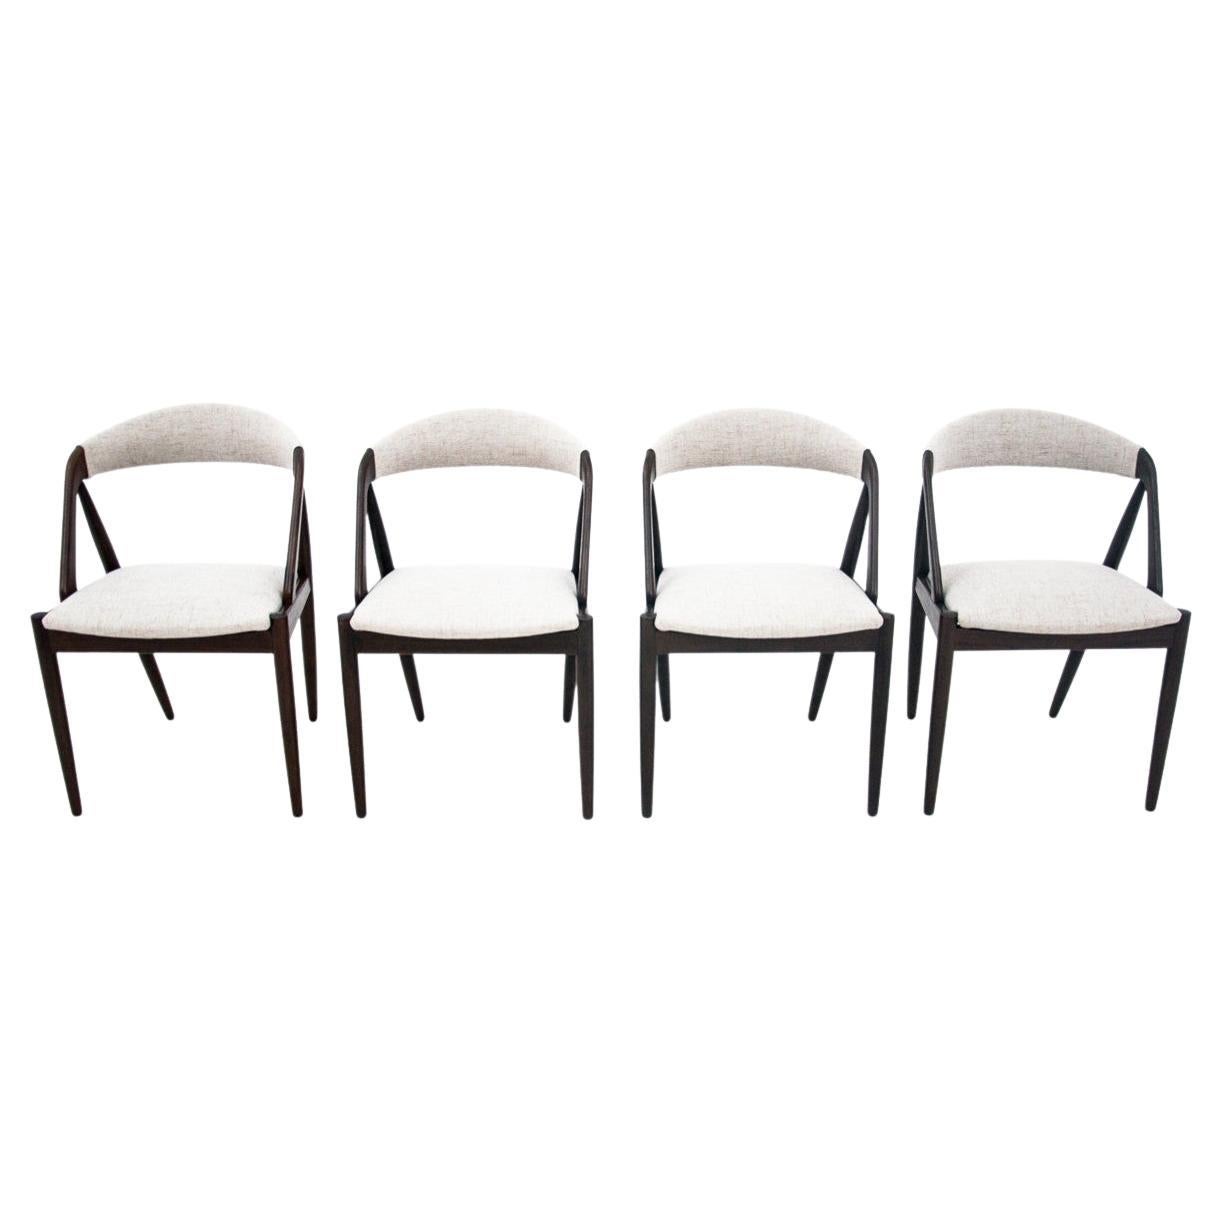 Four Kai Kristiansen Model 31 Teak Dining Room Chairs For Sale